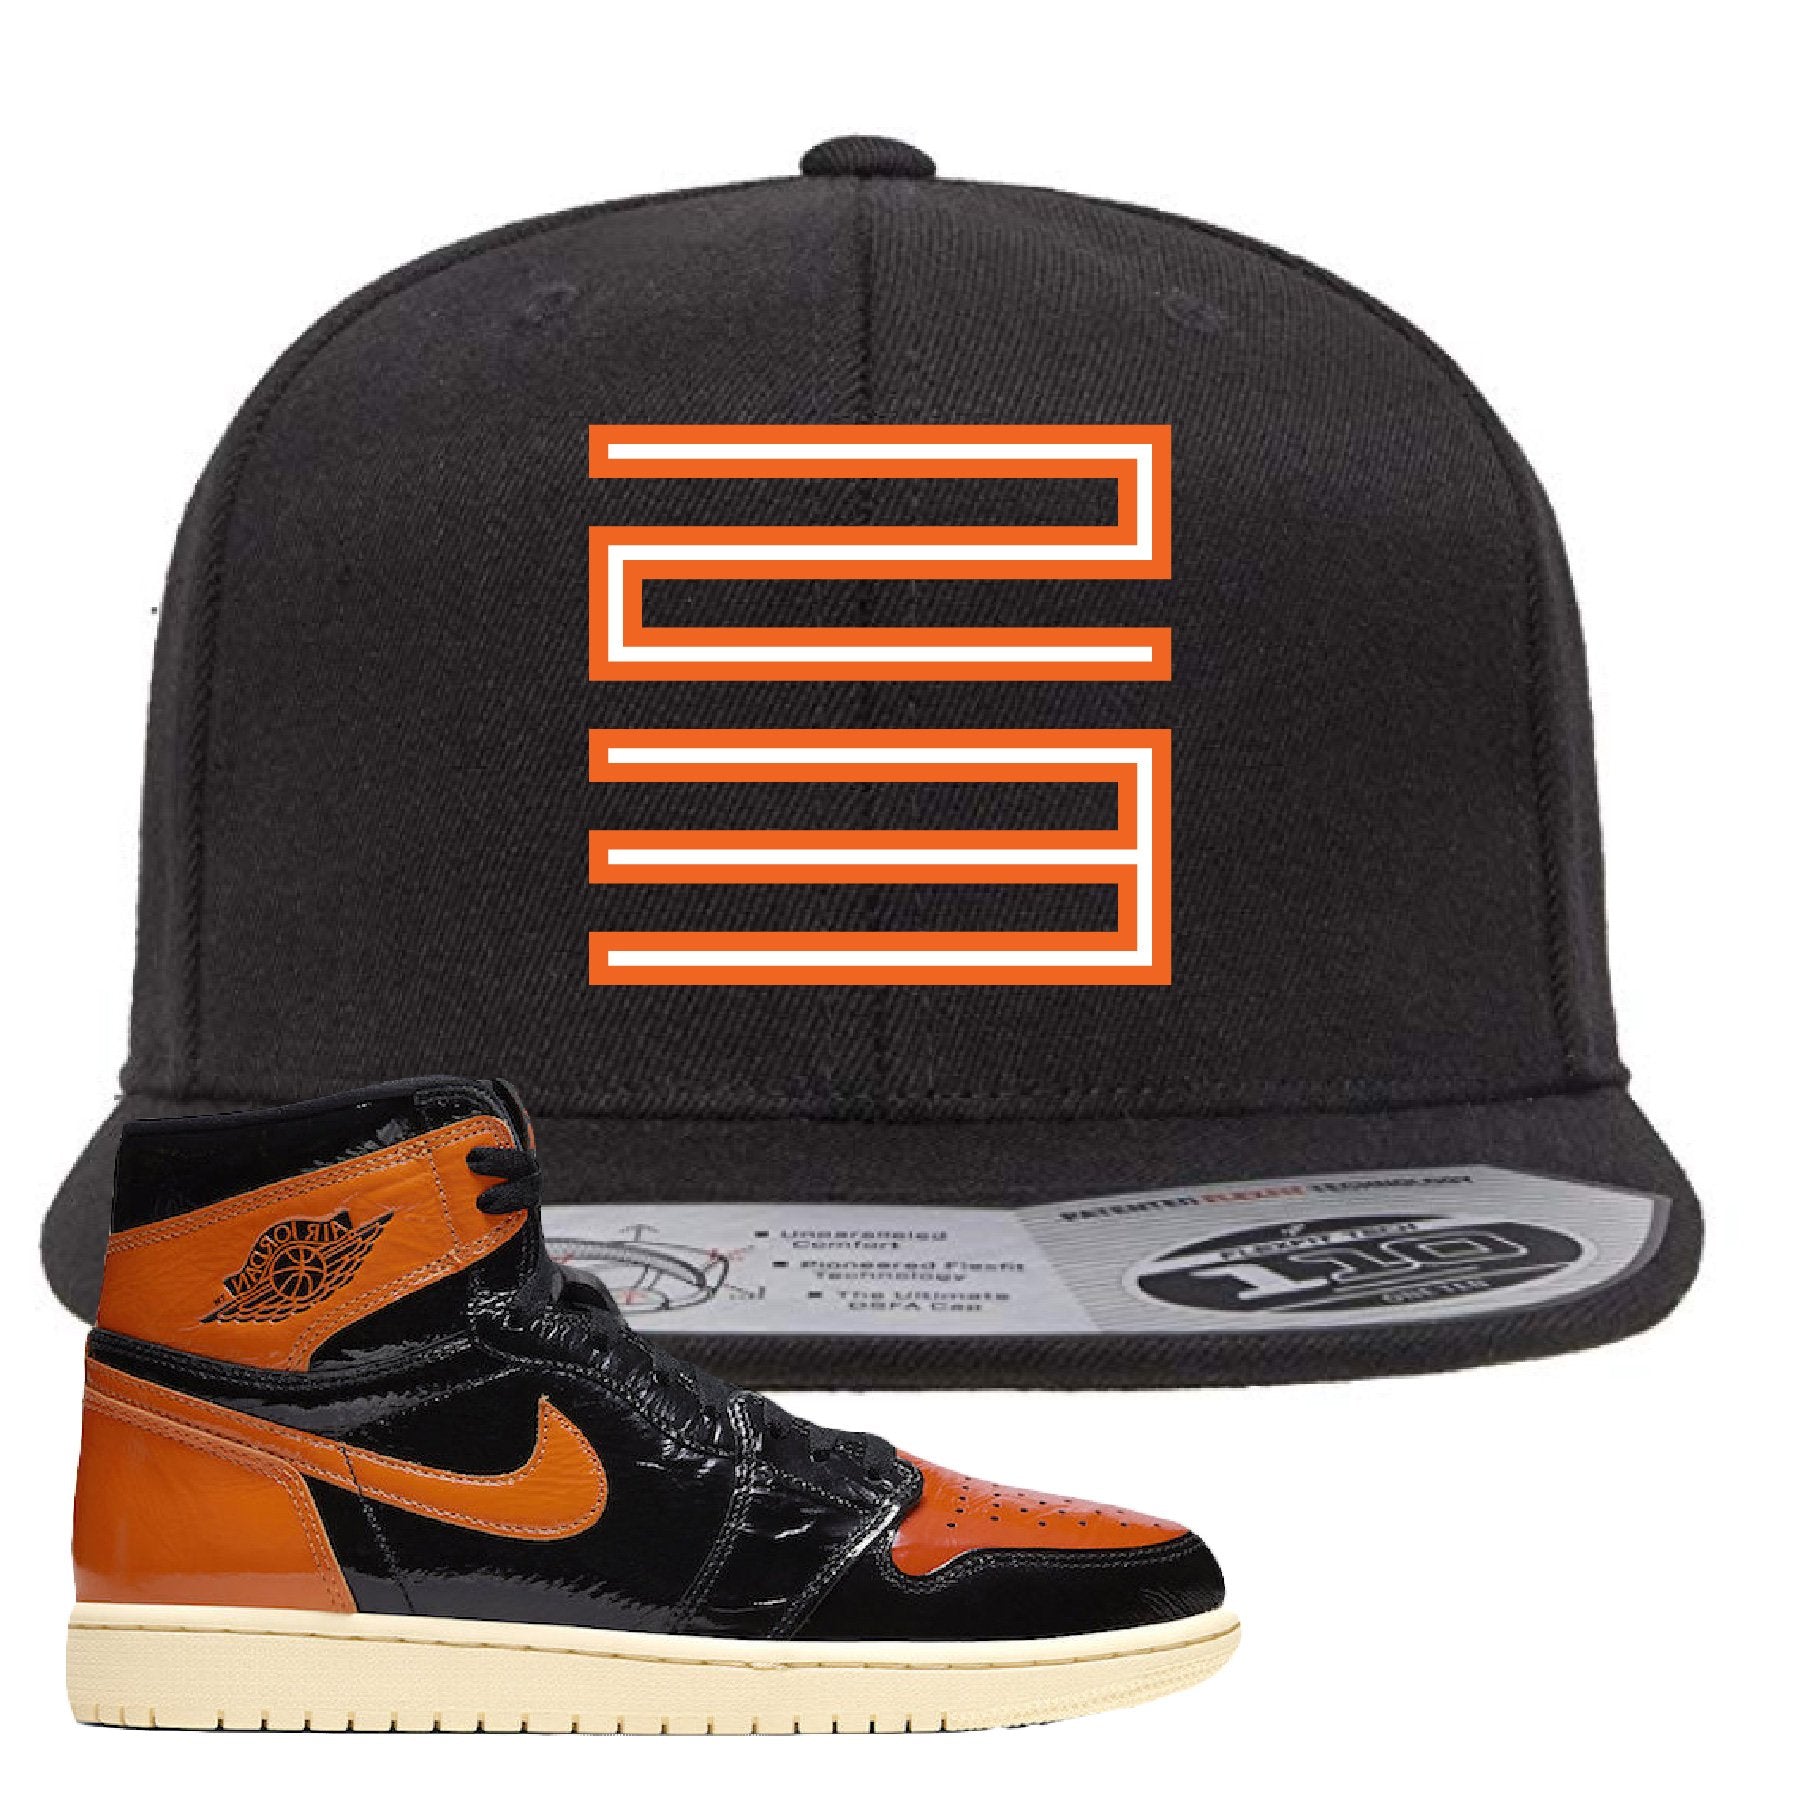 Jordan 1 Shattered Backboard Jordan 11 23 Black Sneaker Hook Up Snapback hat